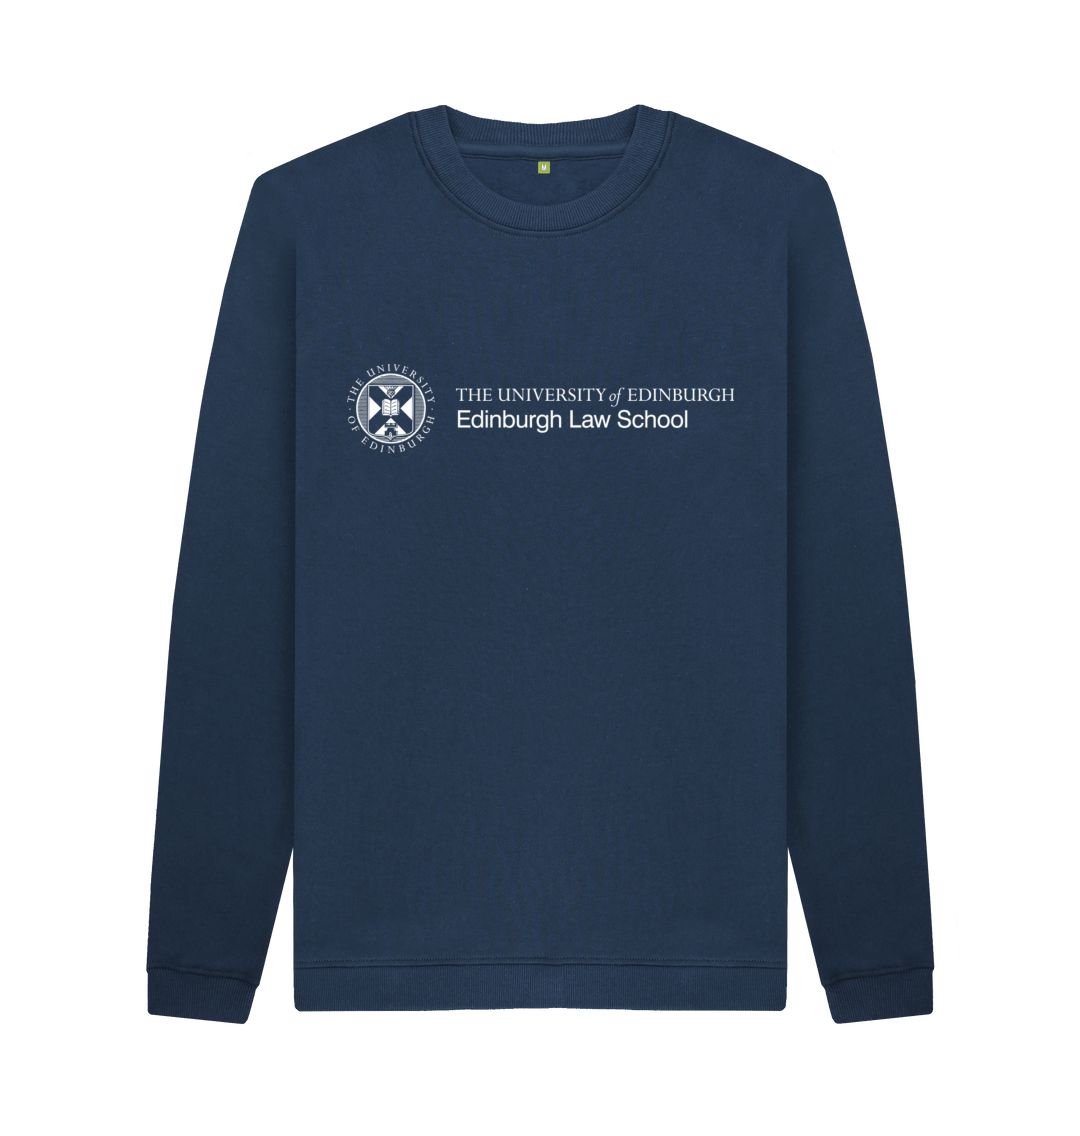 Navy Sweatshirt with white University crest and text that reads ' University of Edinburgh : Edinburgh Law School '